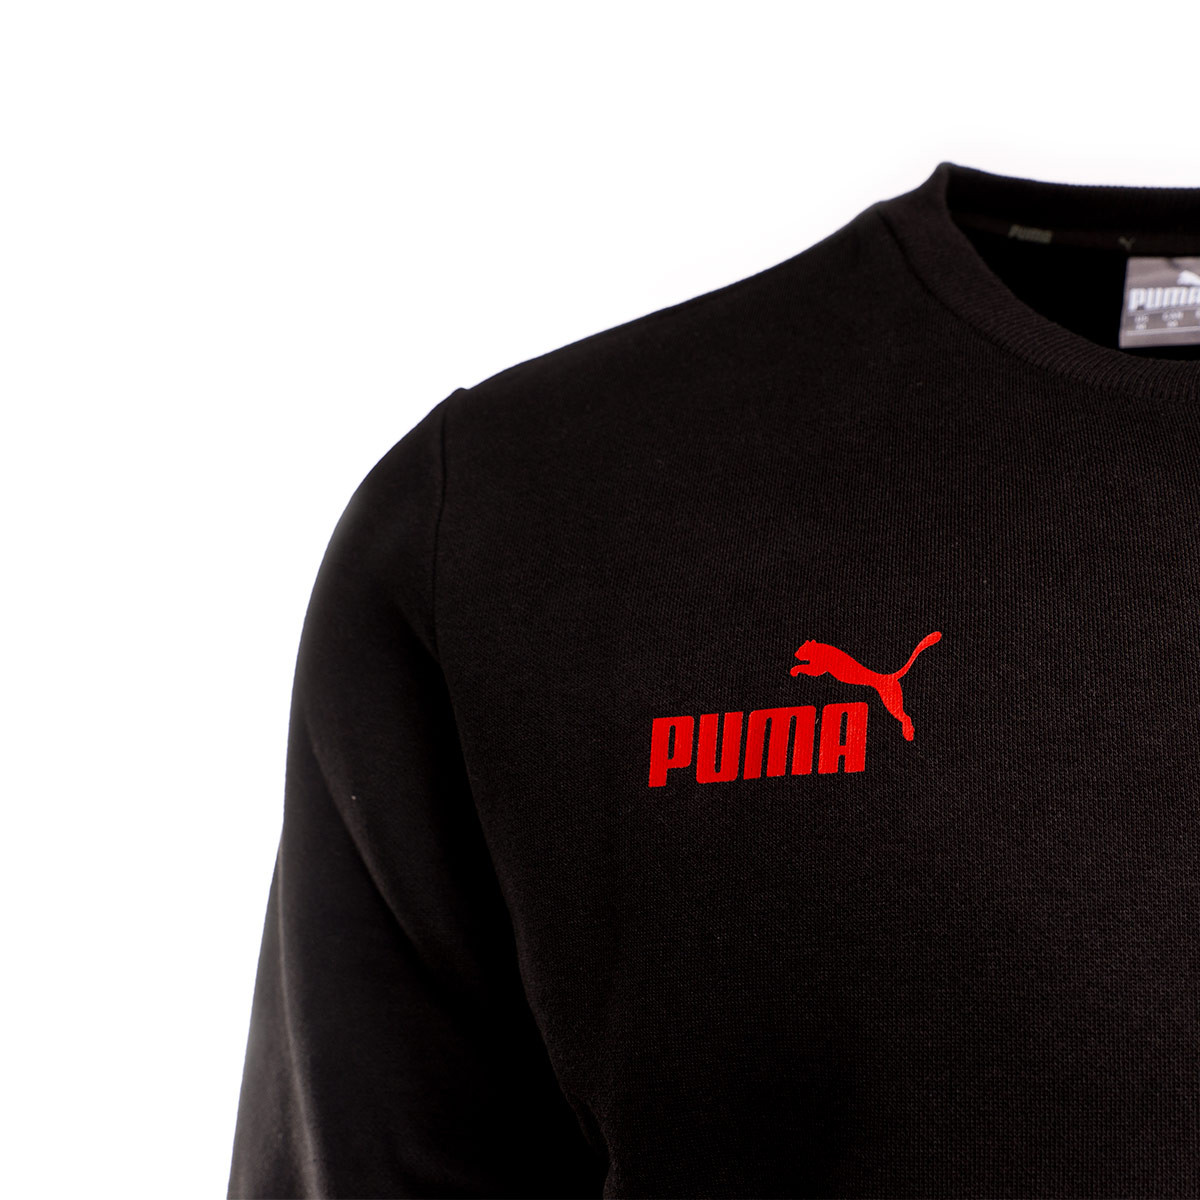 puma black and red t shirt